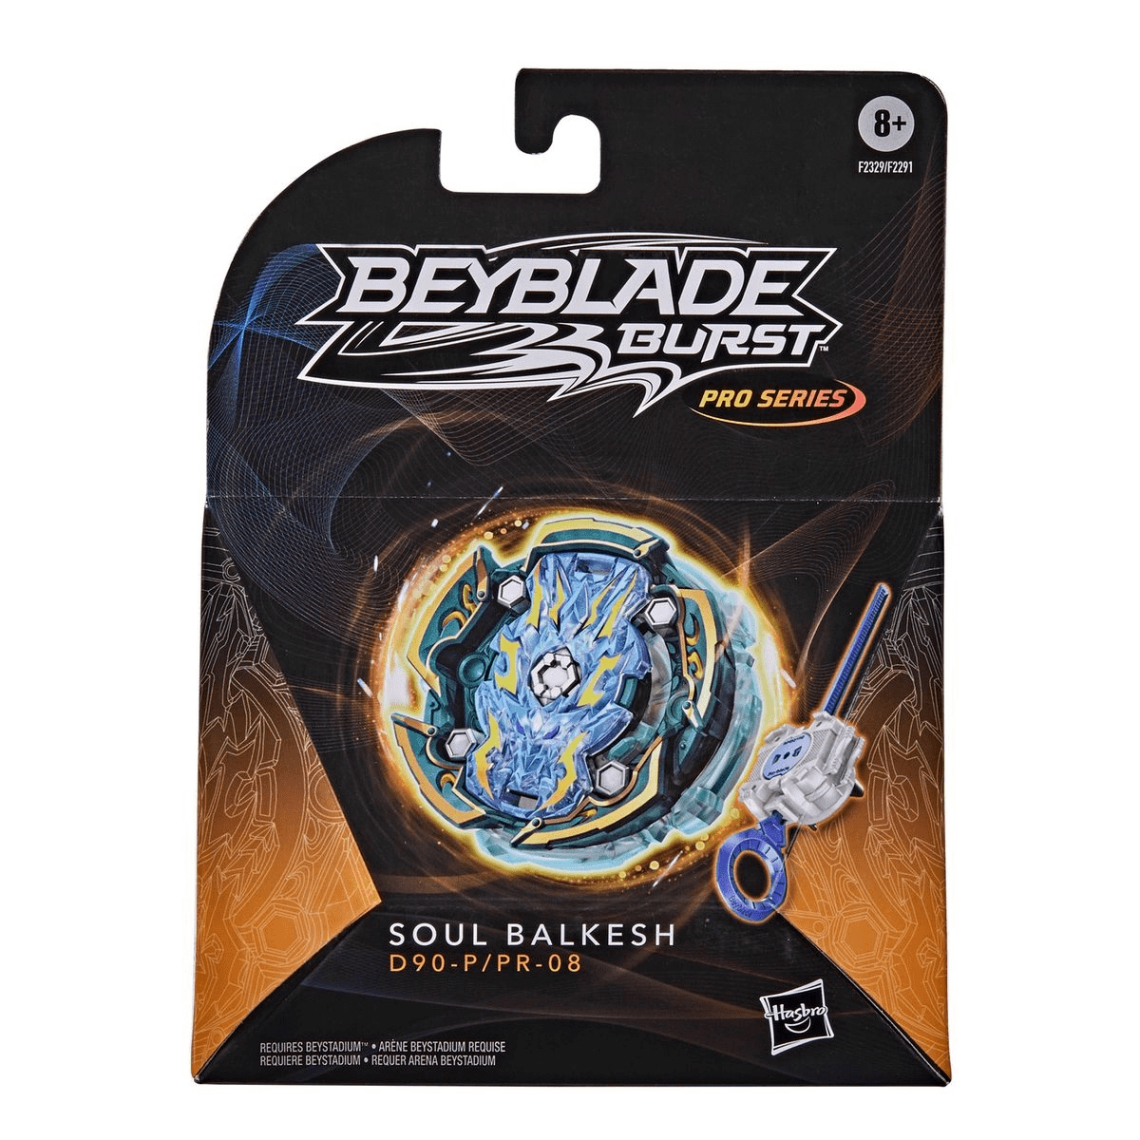 Beyblade - Figurine et réplique Beyblade Pro Soul Balkesh - Animaux